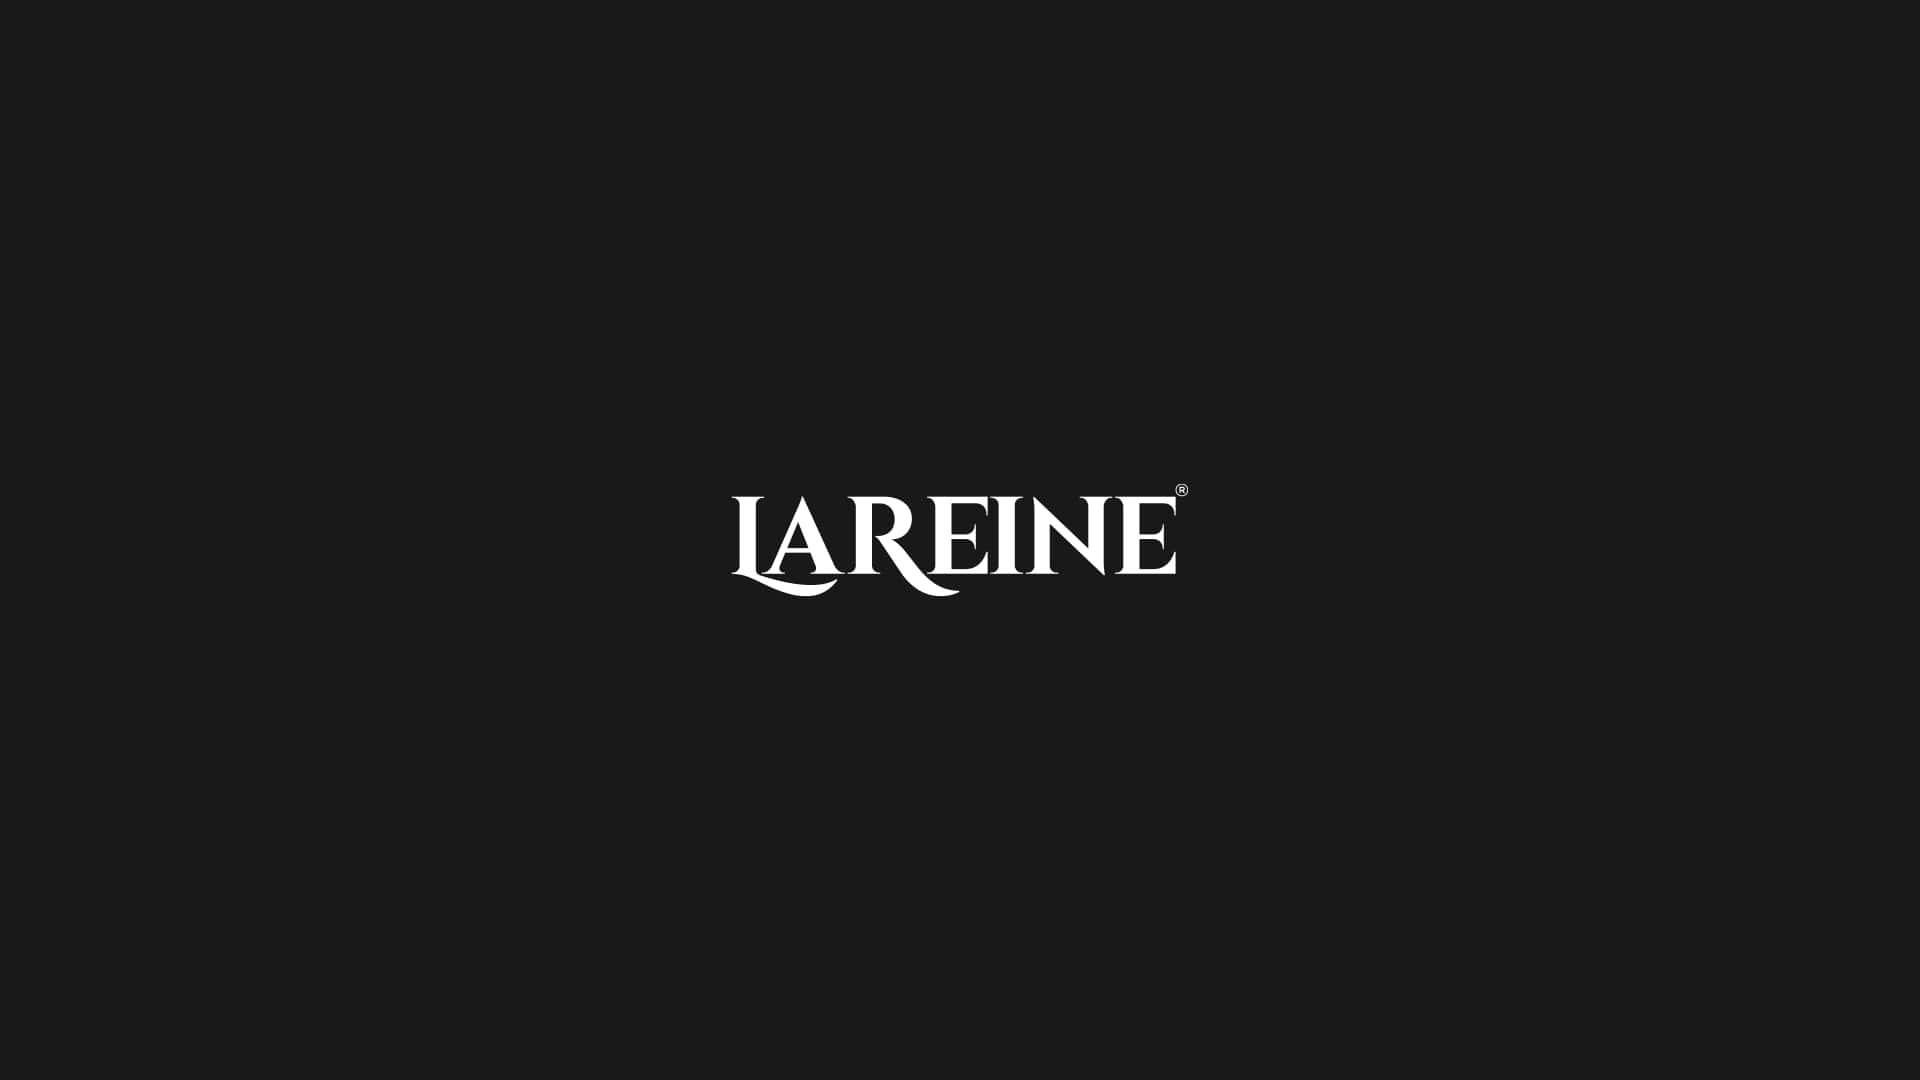 LaReine Branding and Packaging Design